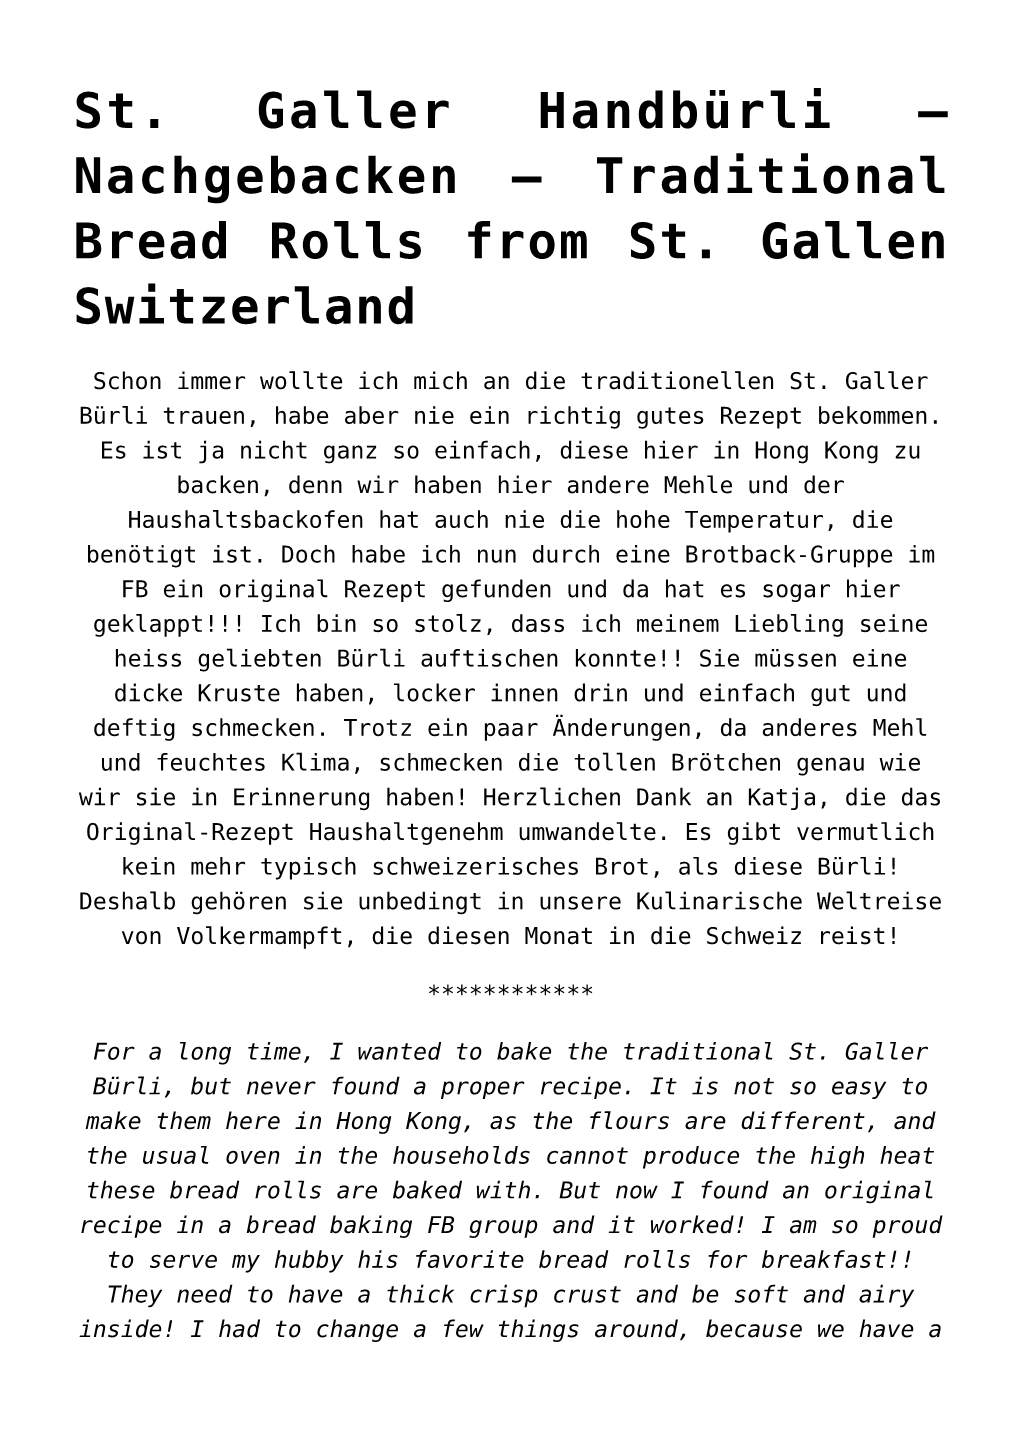 Nachgebacken – Traditional Bread Rolls from St